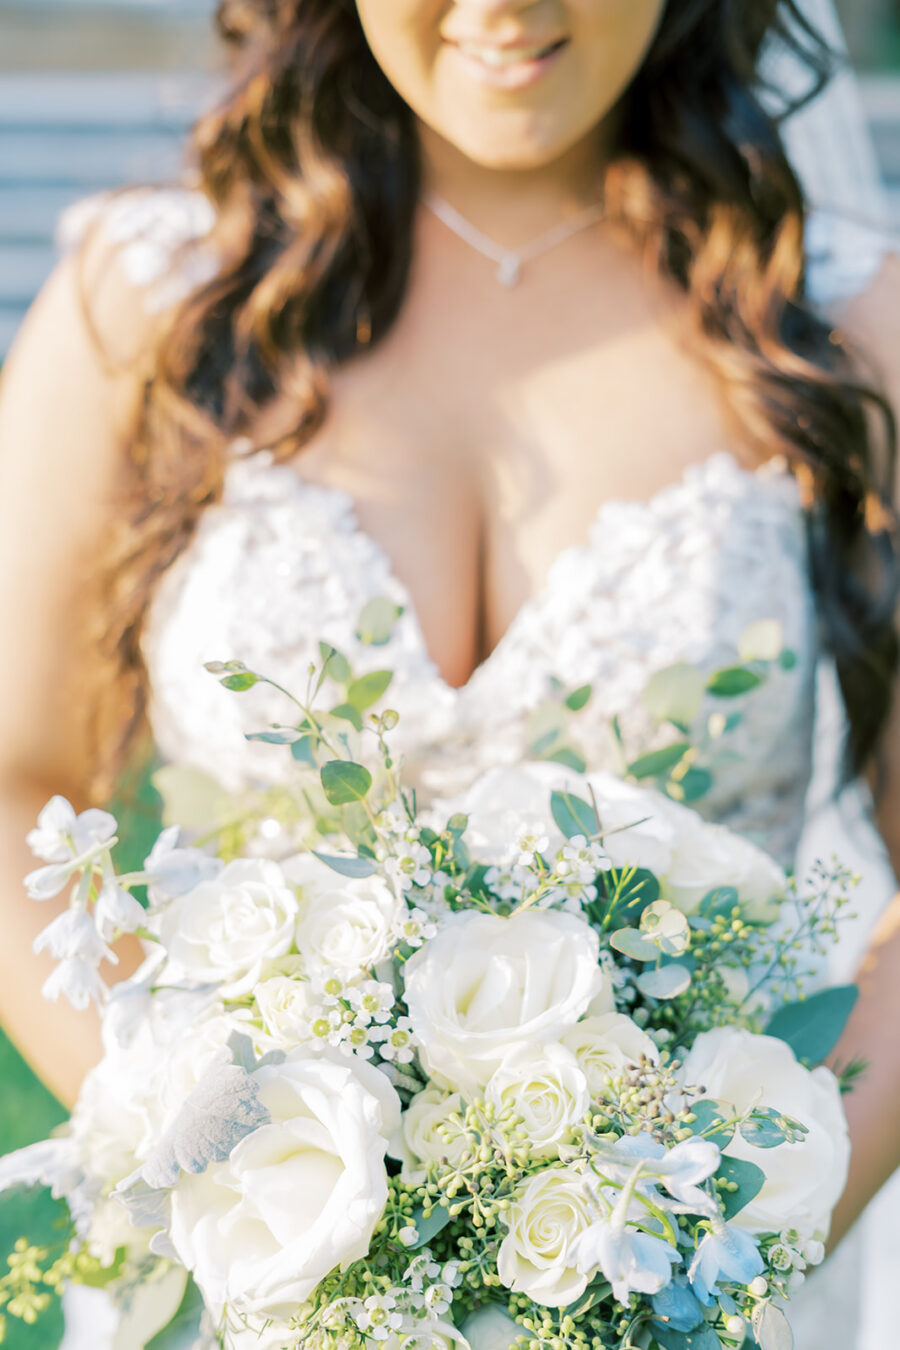 Nashville Flower Market Bouquet | Nashville Bride Guide